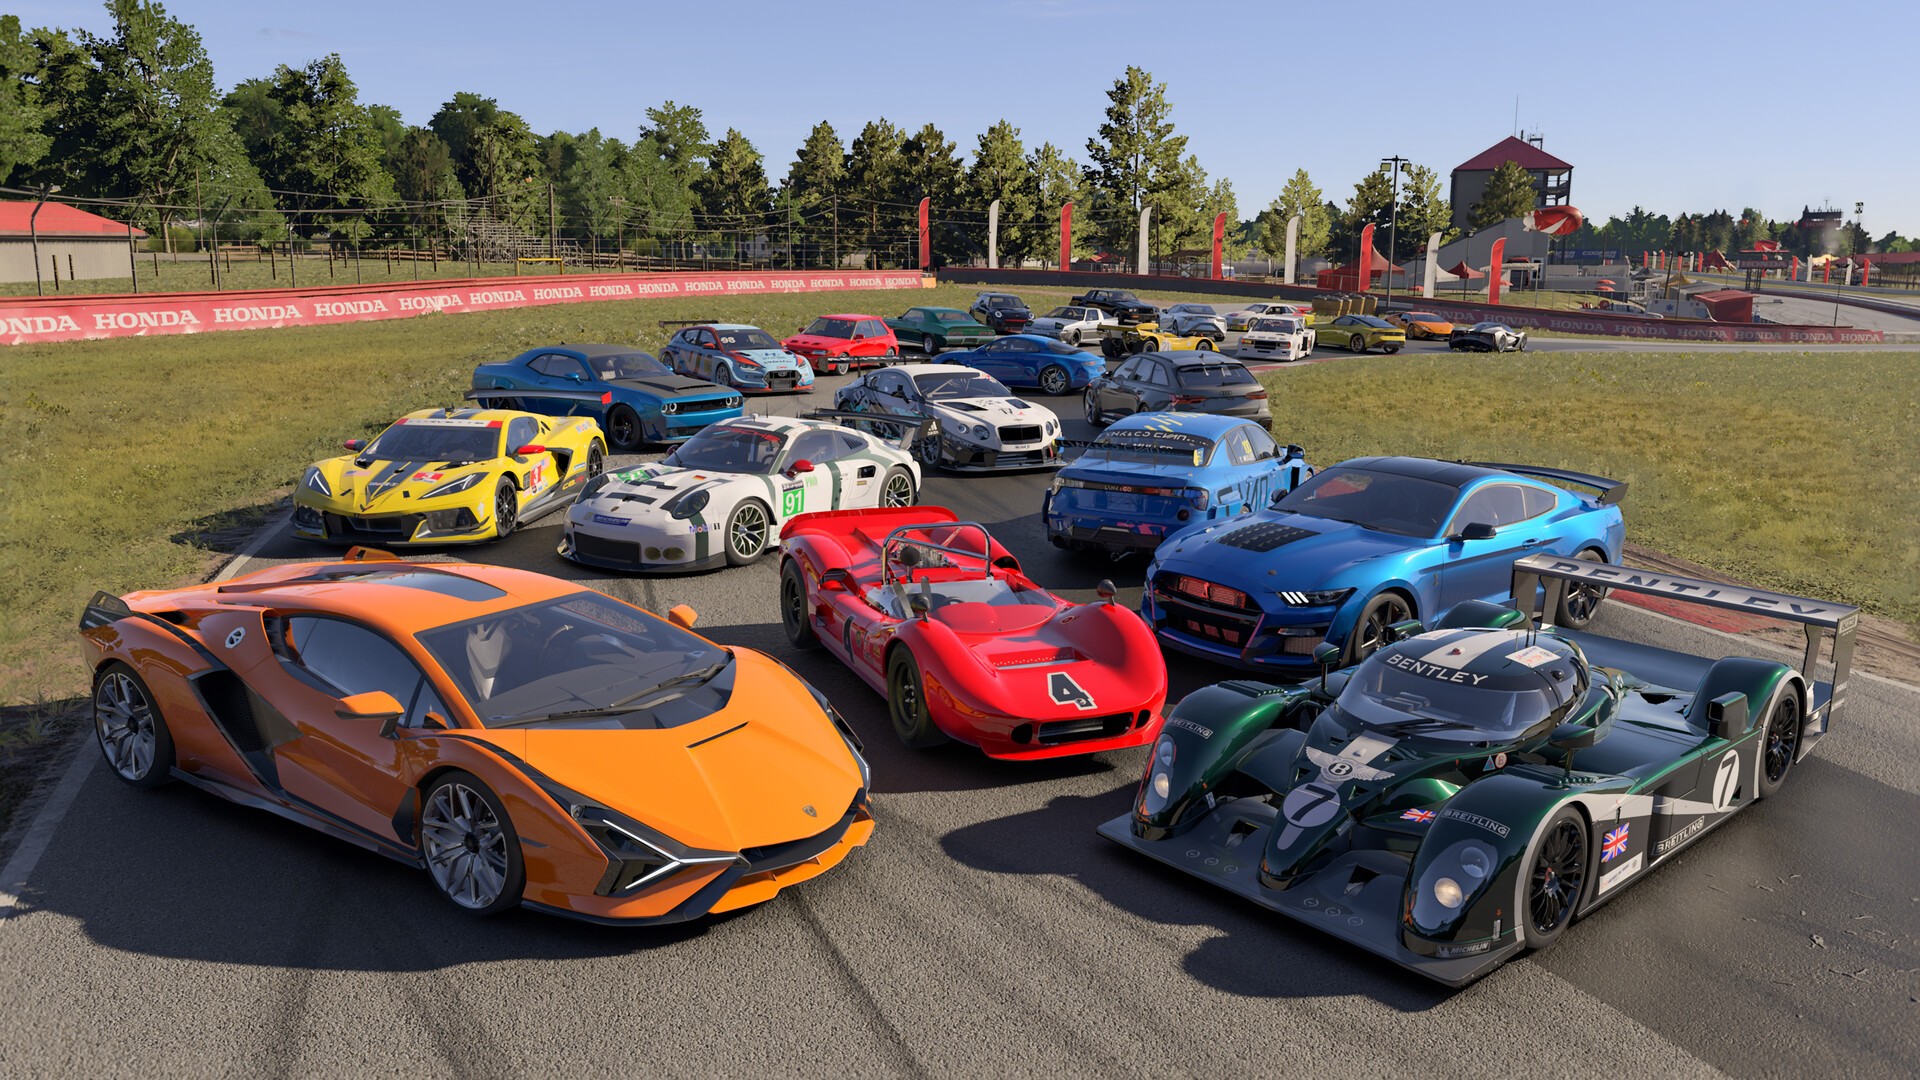 Forza Motorsport: Premium Add-ons Bundle - Xbox Series X